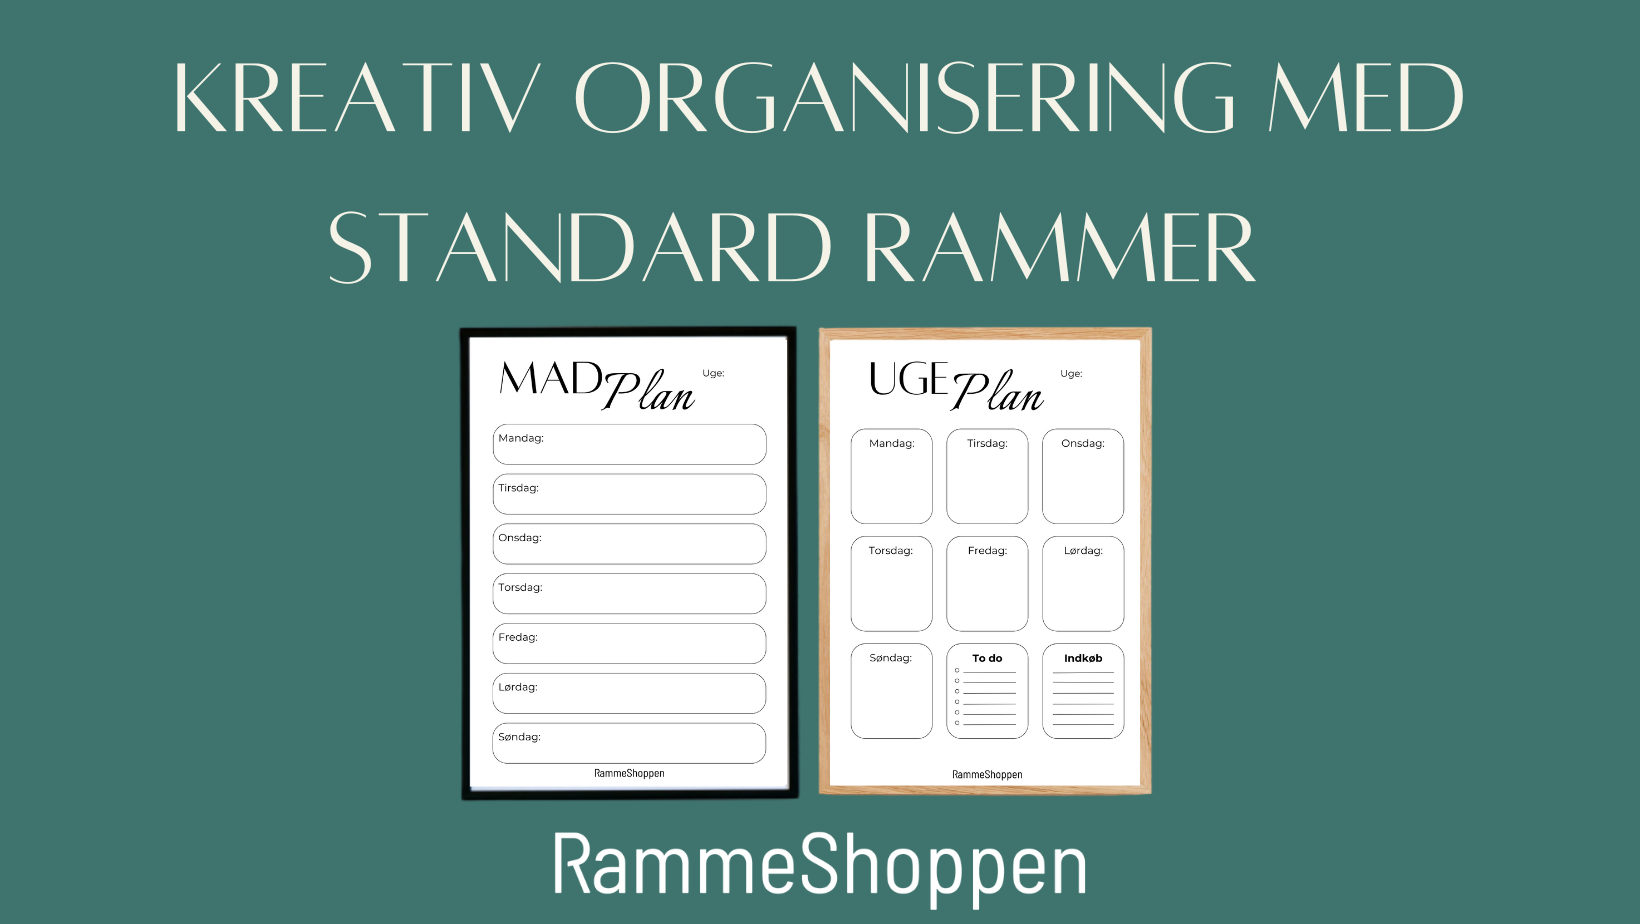 Kreativ organisering med standard rammer som ugeplan eller madplan 